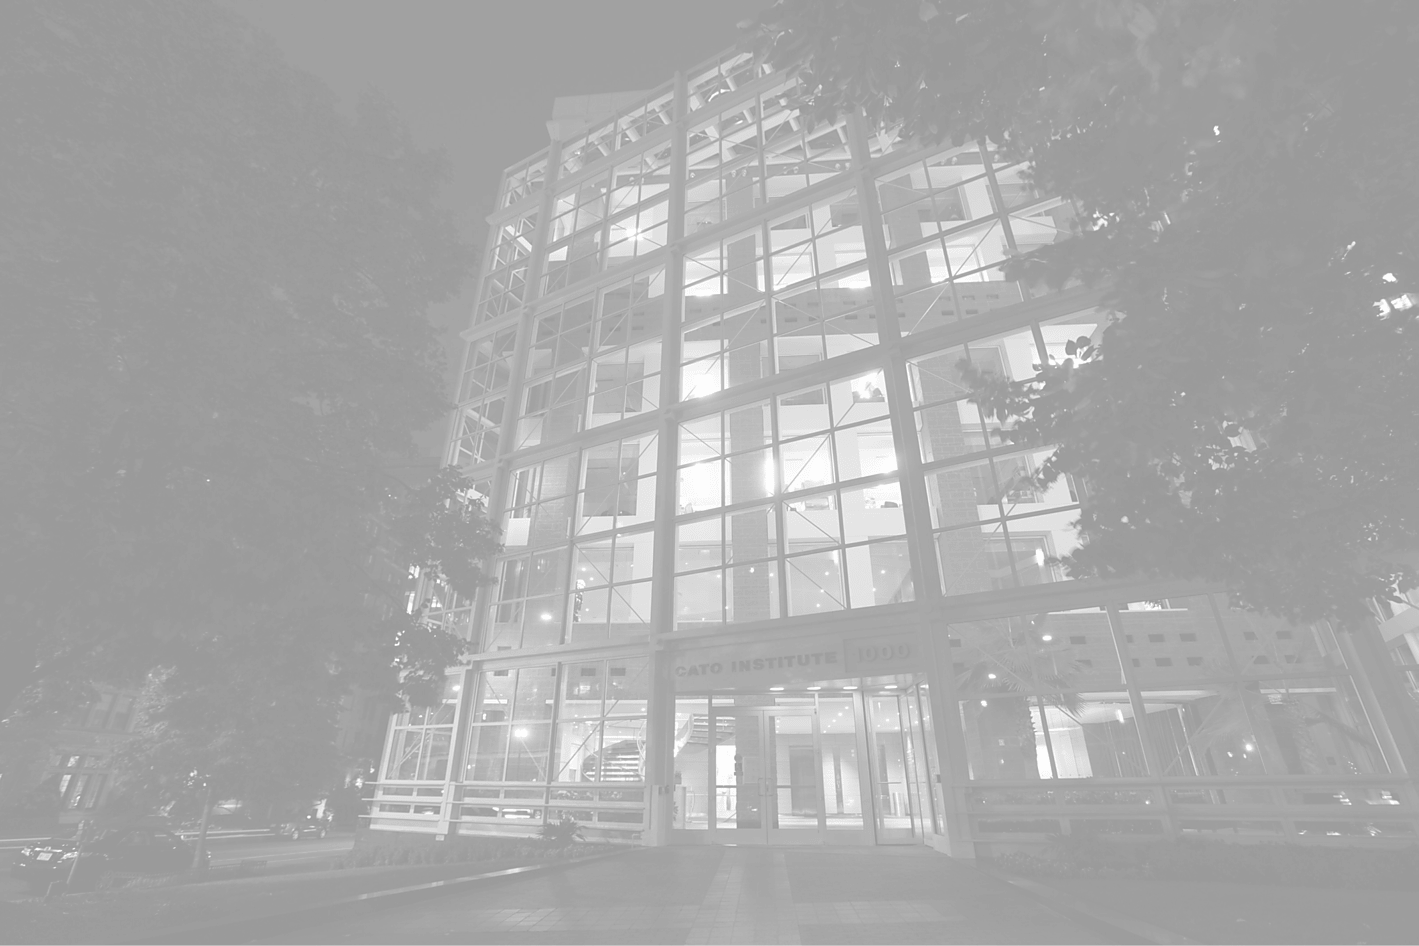 Cato headquarters at night